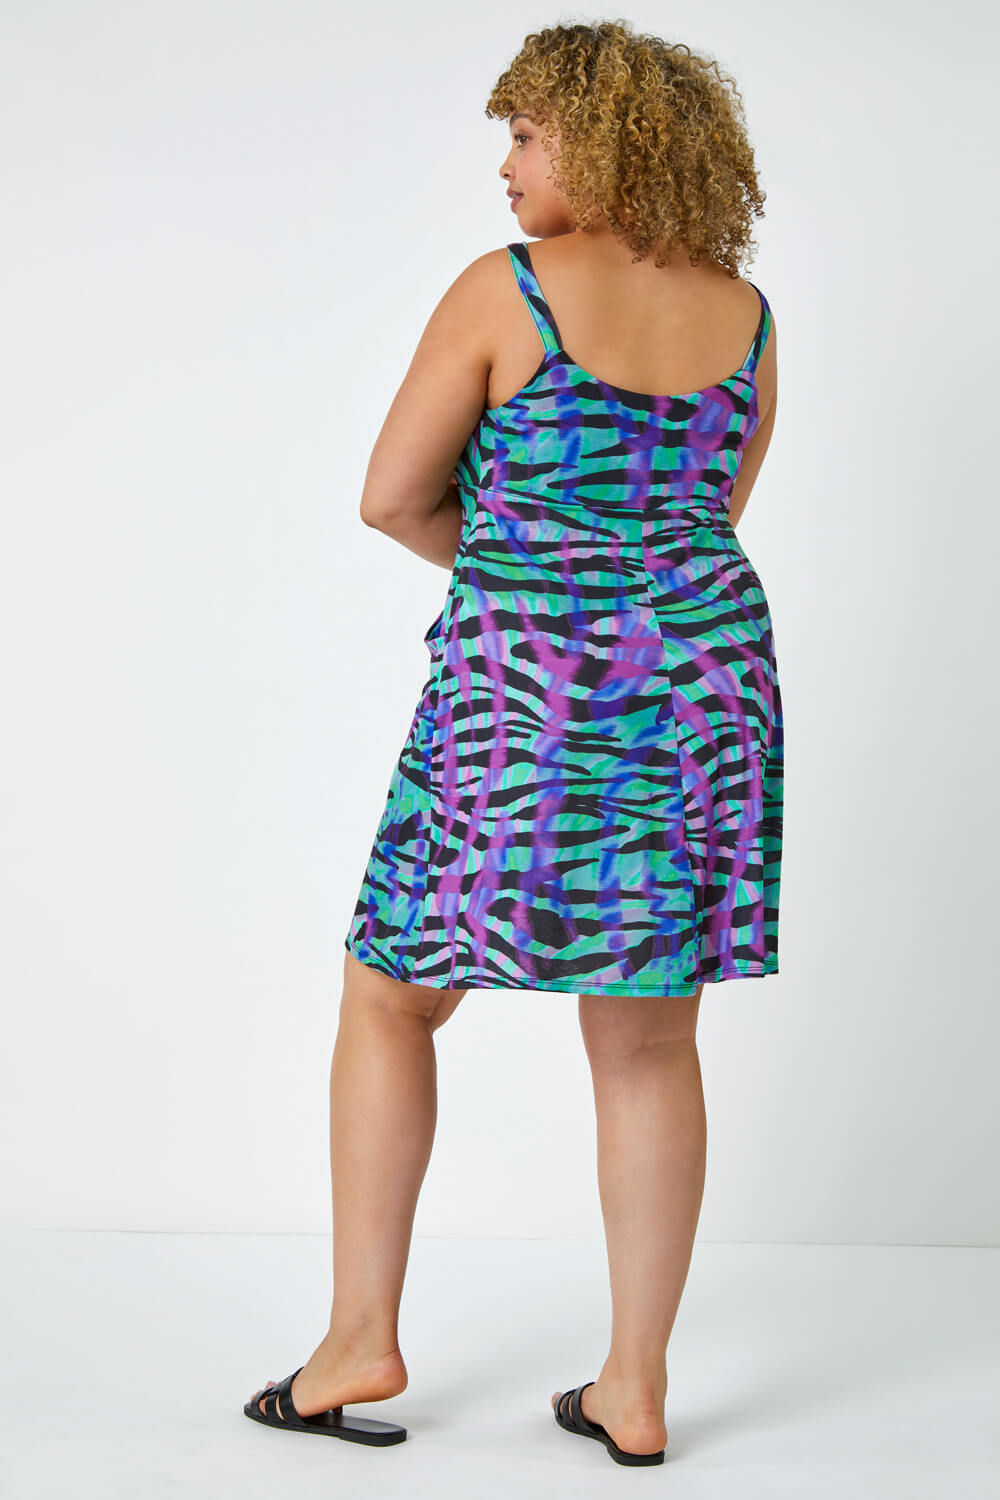 Green Curve Sleeveless Zebra Print Stretch Dress, Image 3 of 5